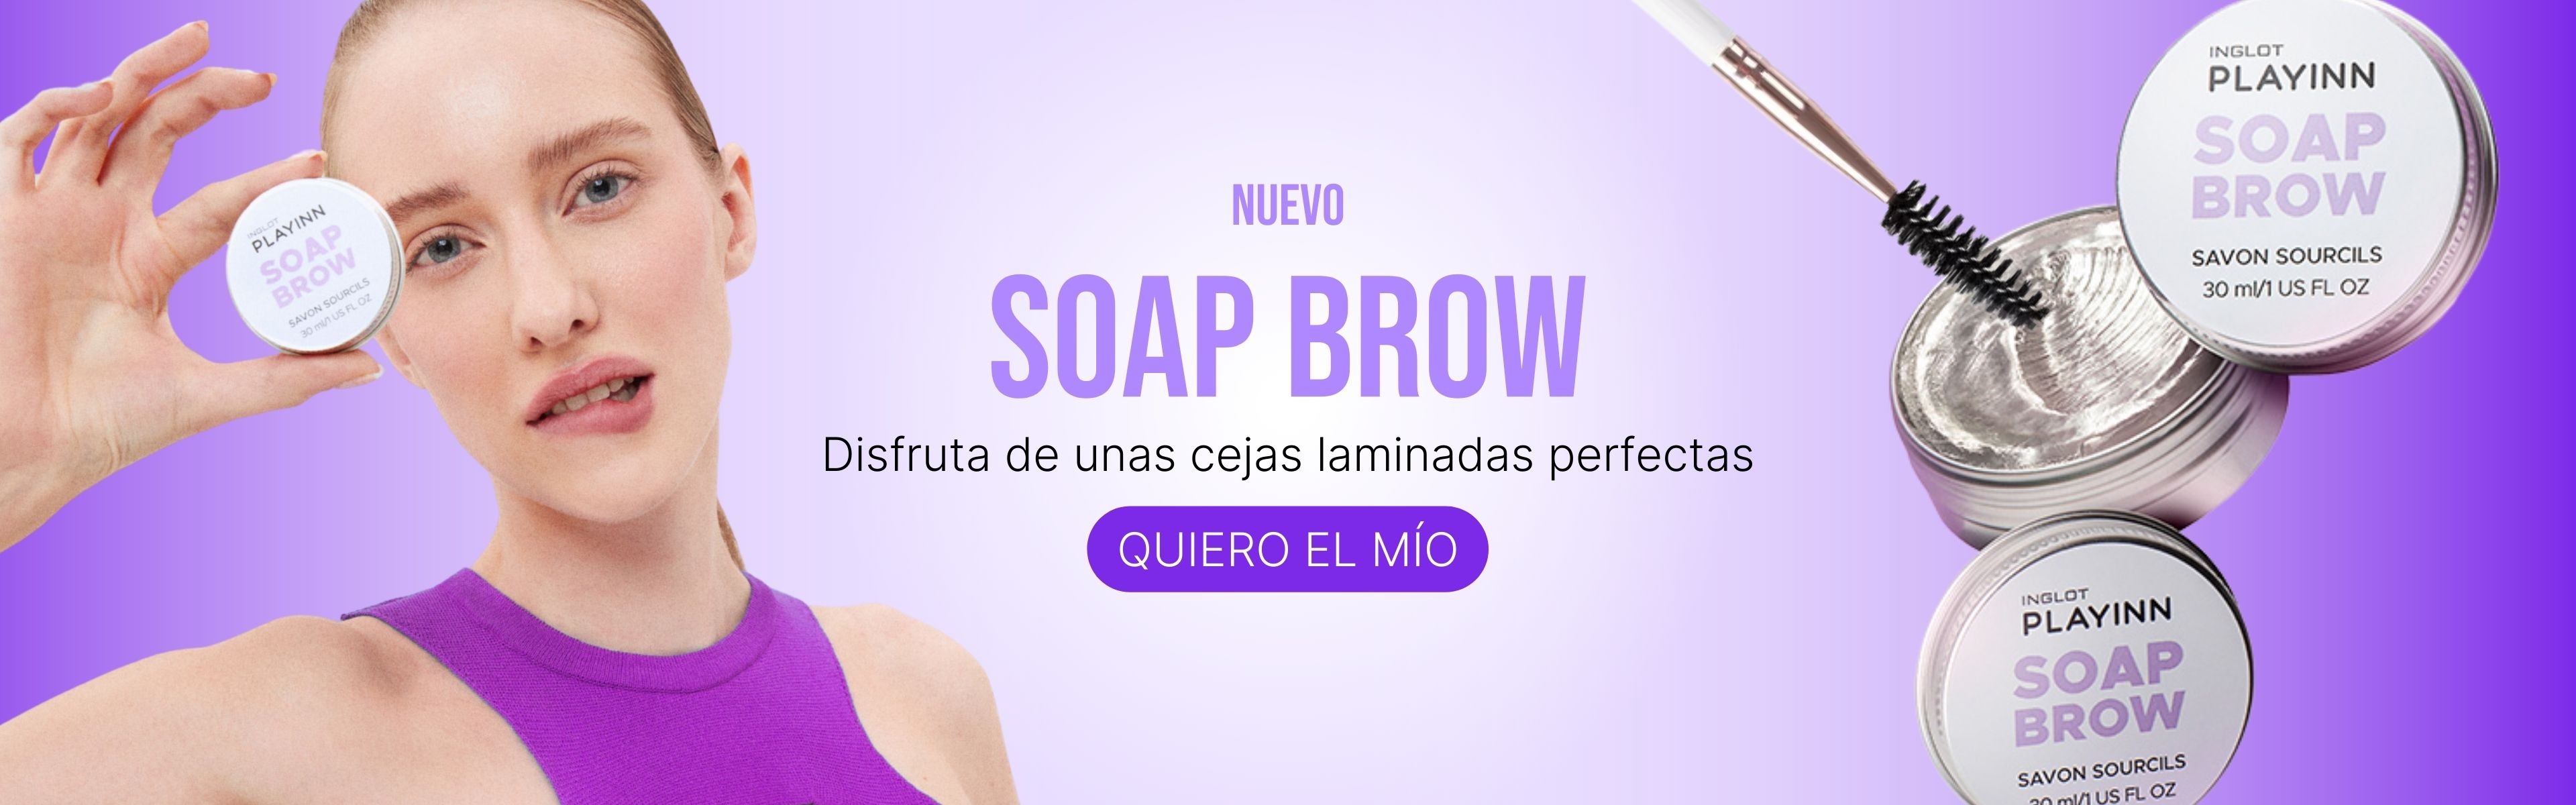 soap brow